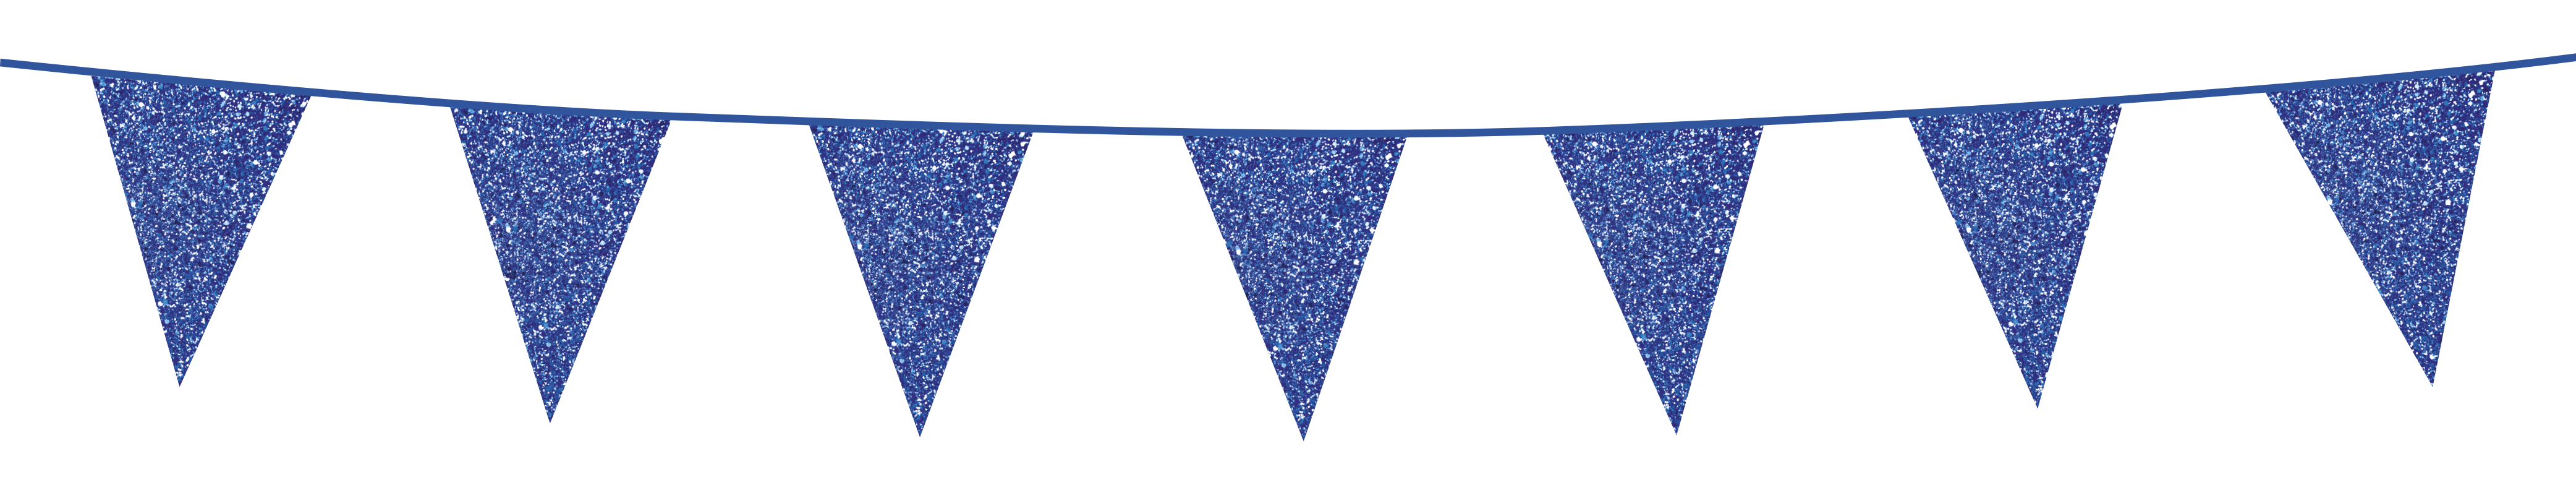 Bunting Glitter 6m. blue - size flags 20x30cm per 6